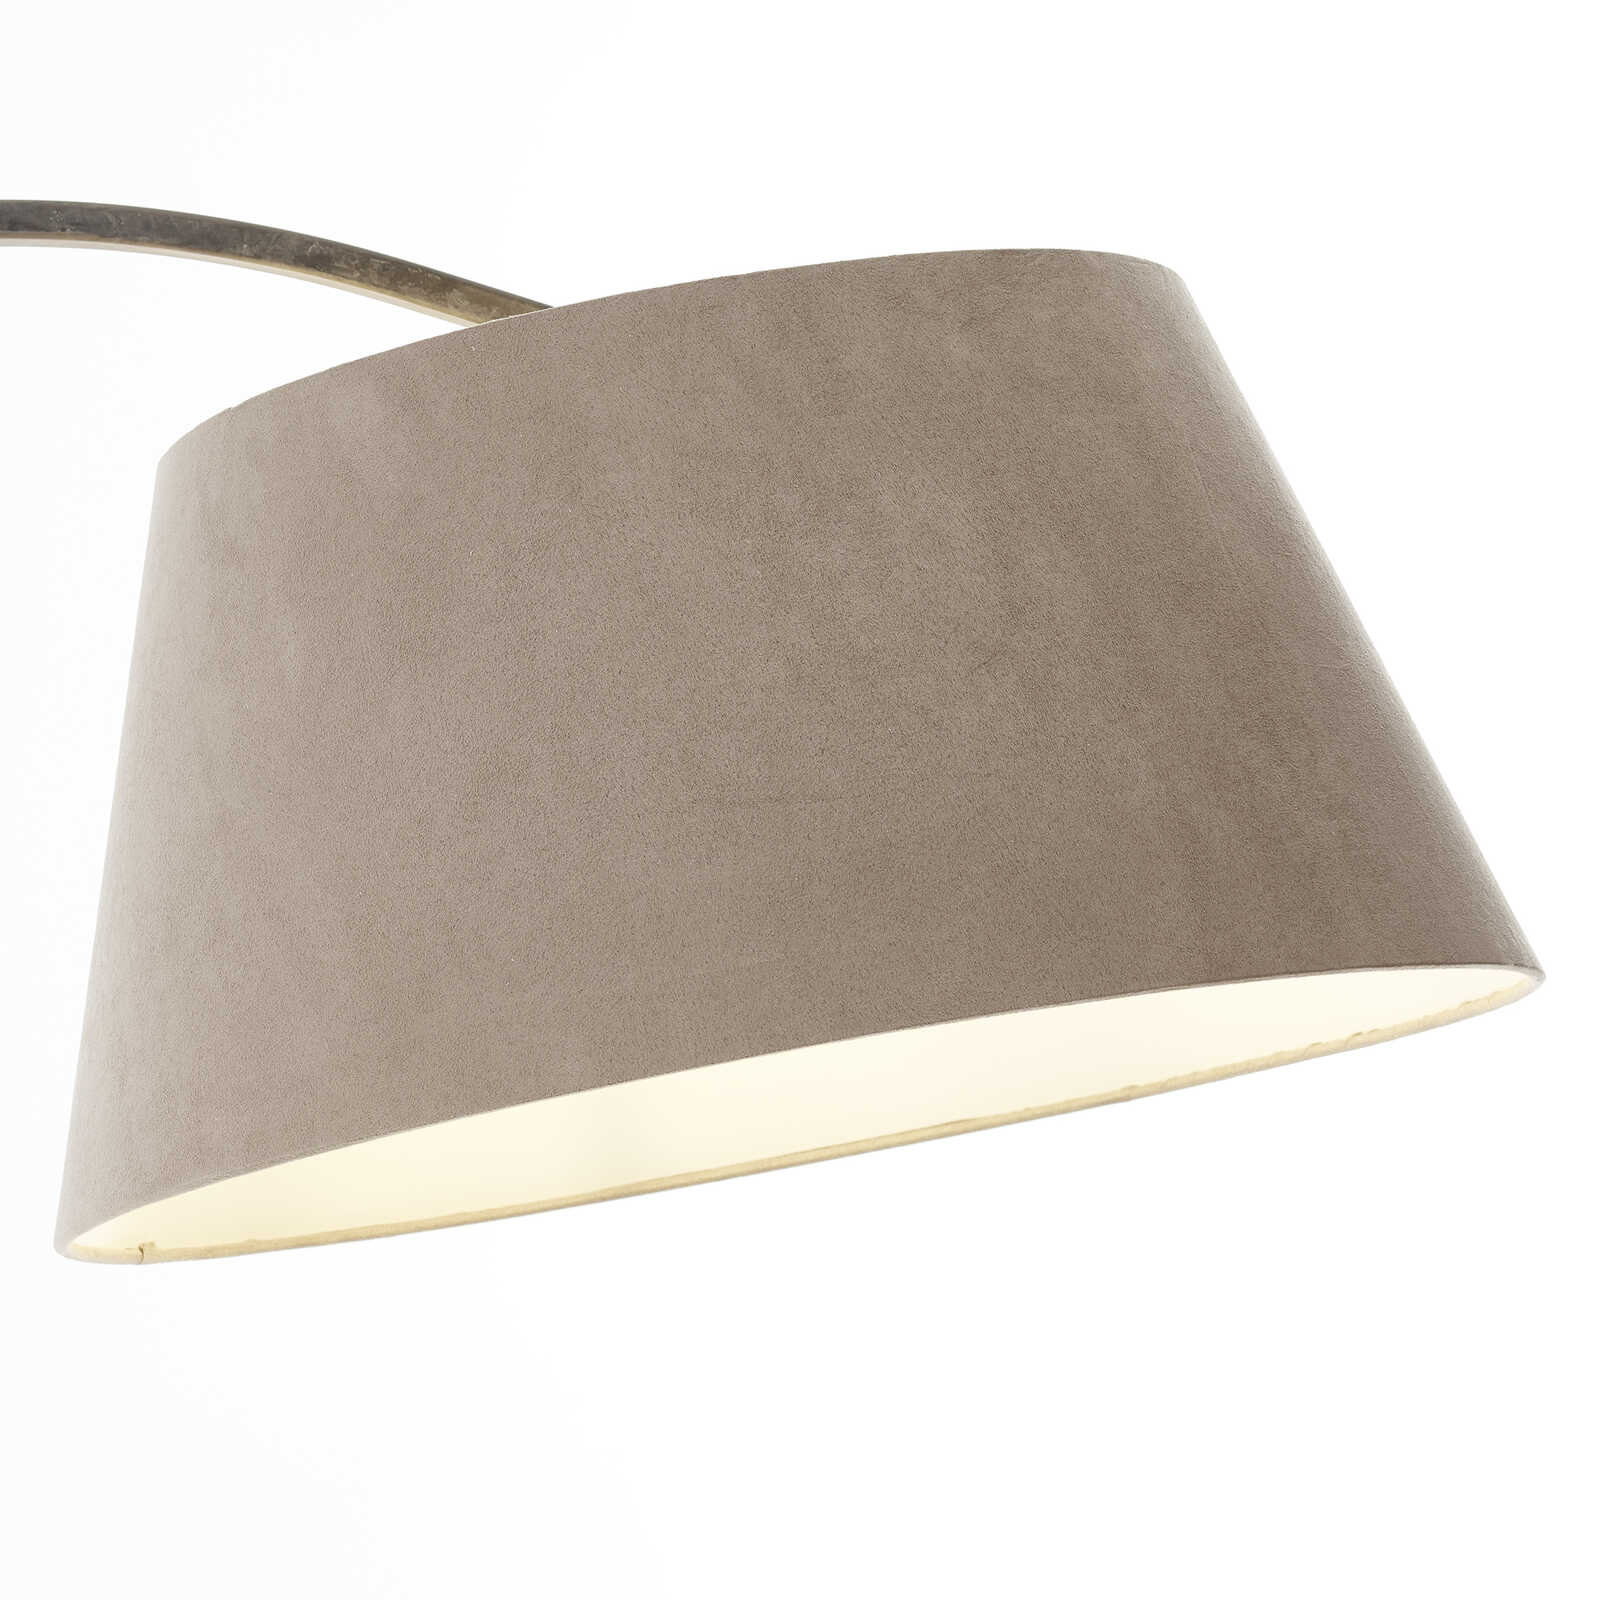             Arched textile floor lamp - Coco - Grey
        